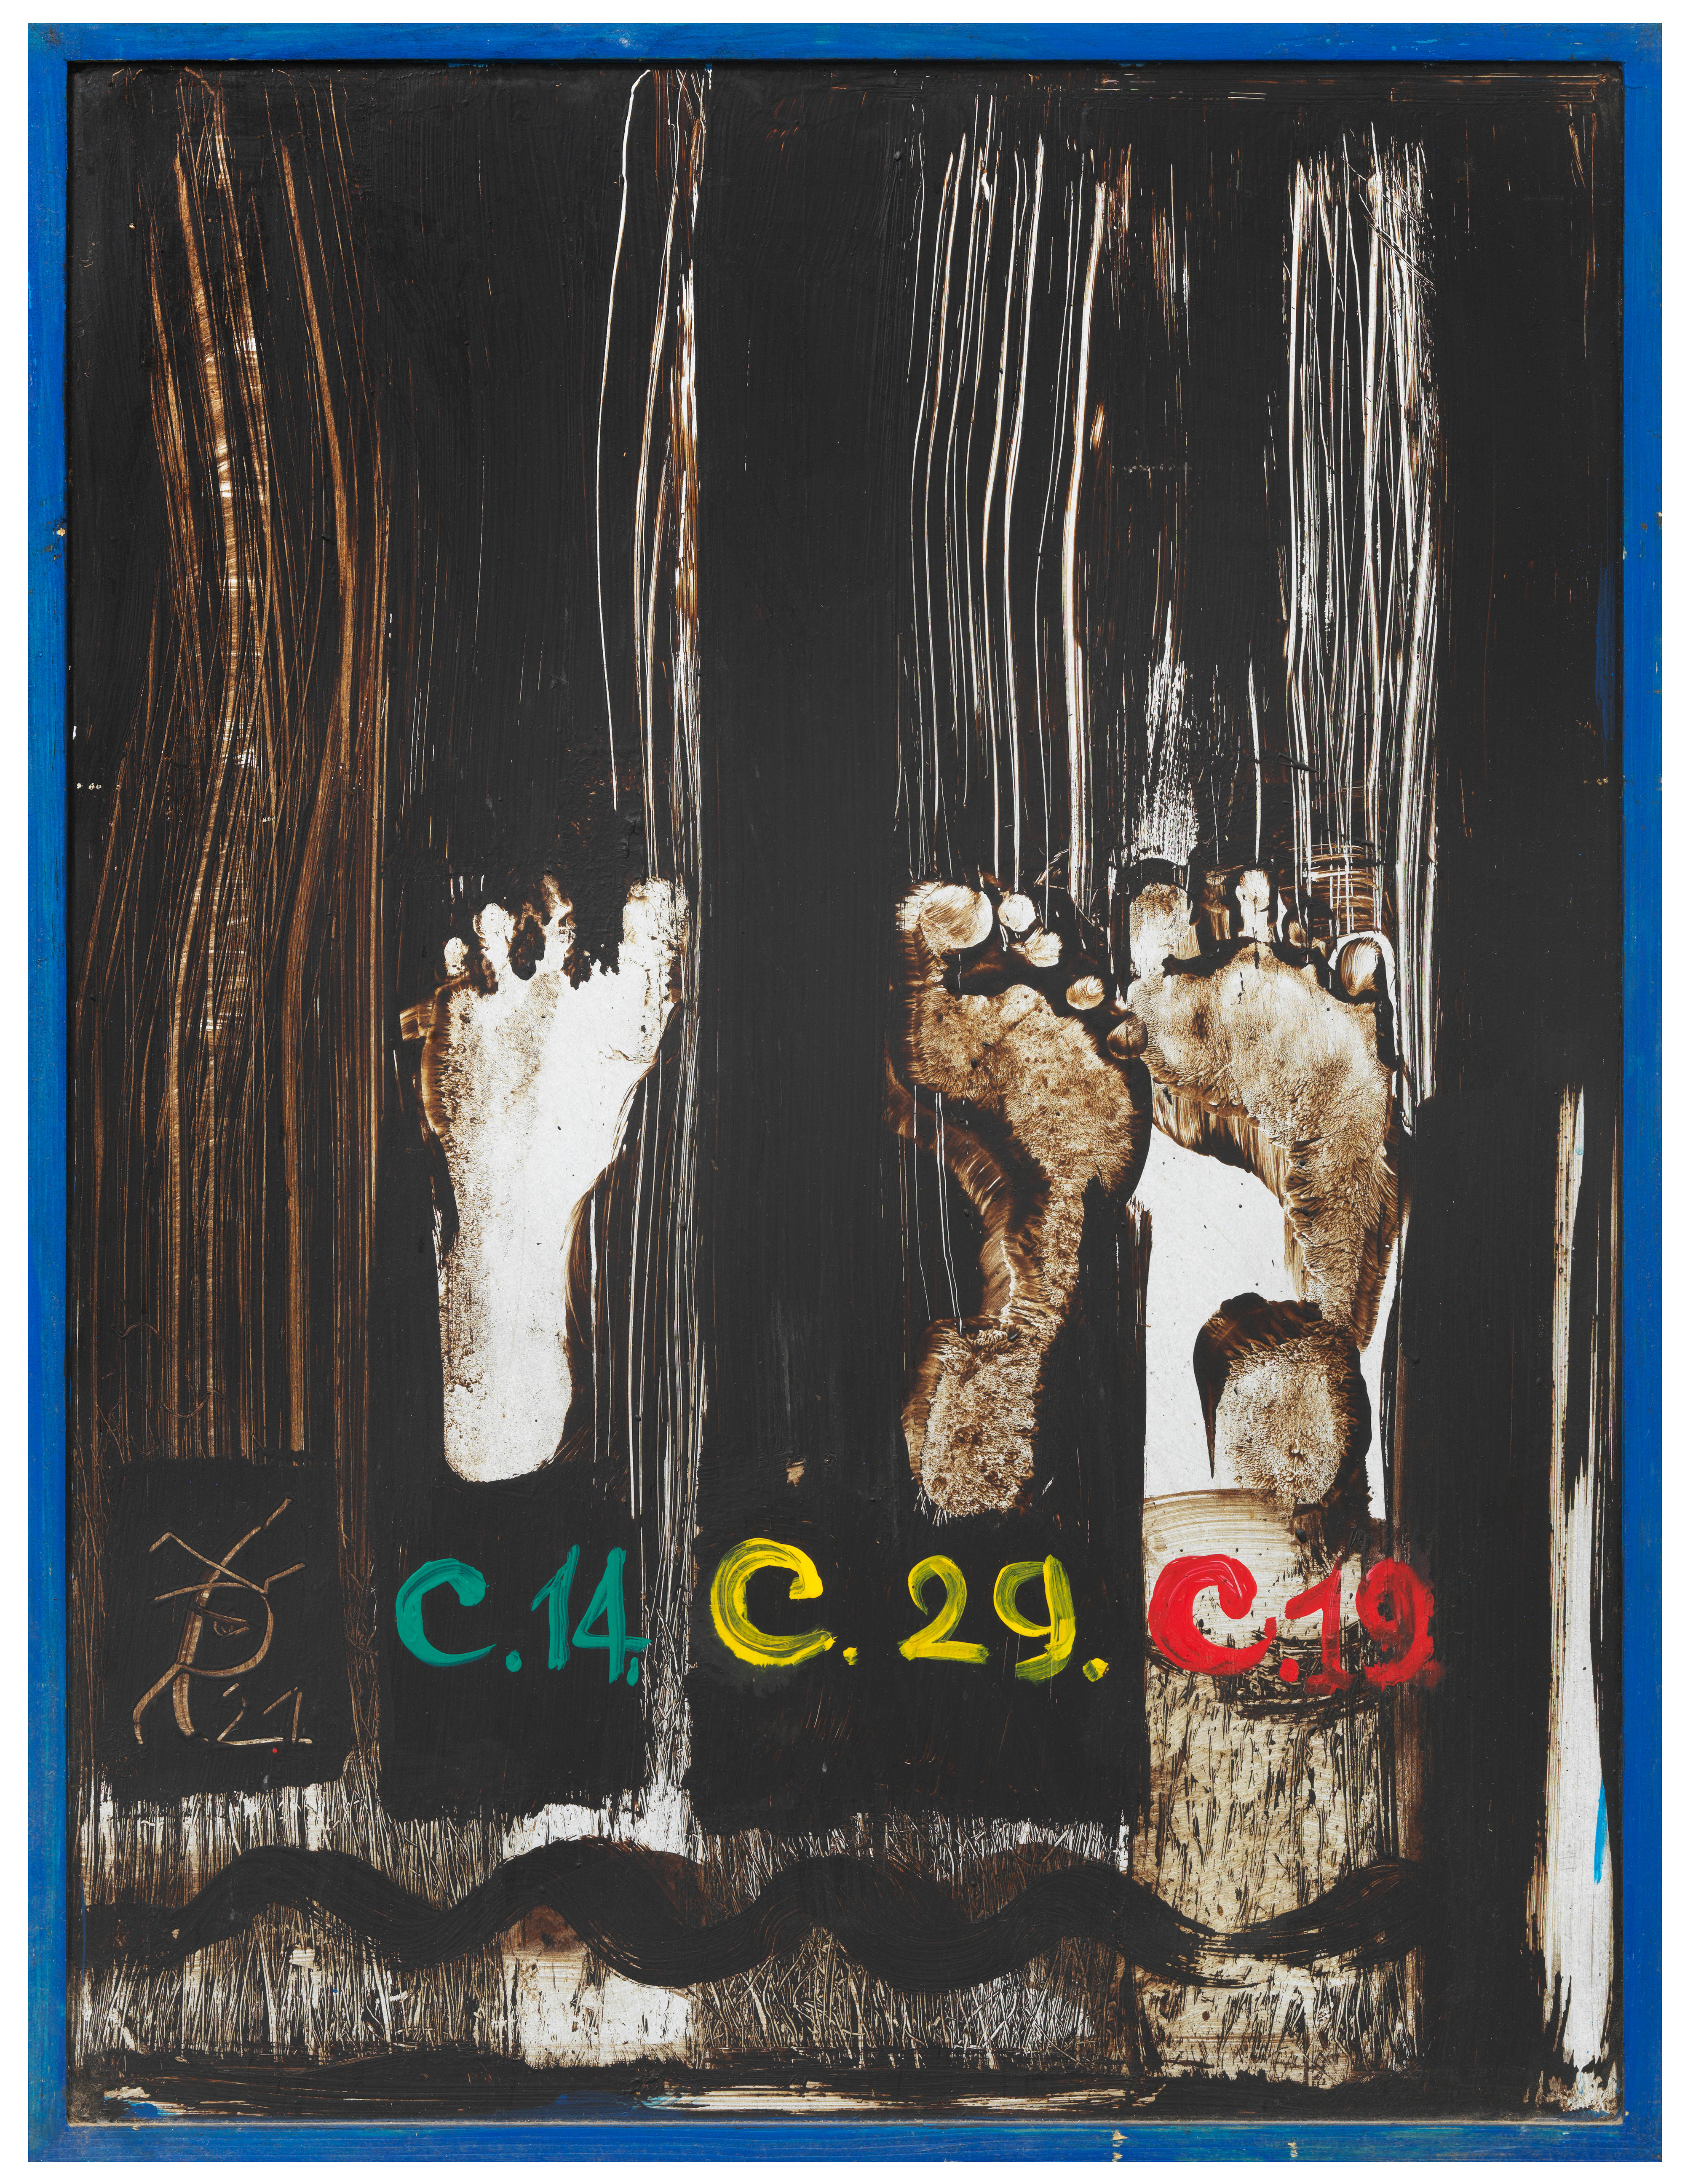 Galerie Barbara Thumm \ El Hadji Sy – Silhouettes Critiques \ C14 C29 C19, 2021 (2021)